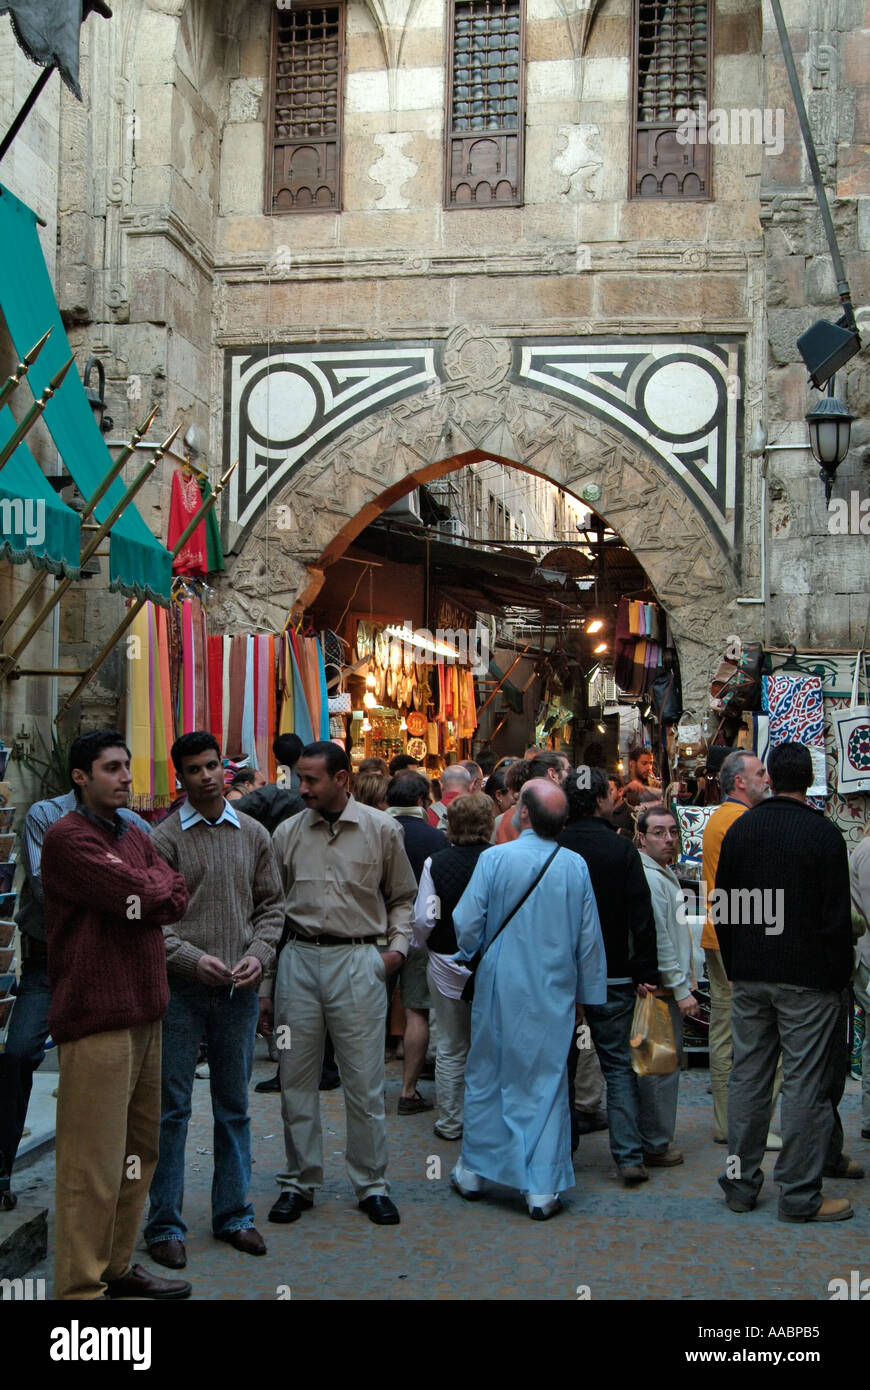 Medieval Gate, Khan al-Khalili, Islamic Cairo, Egypt Stock Photo